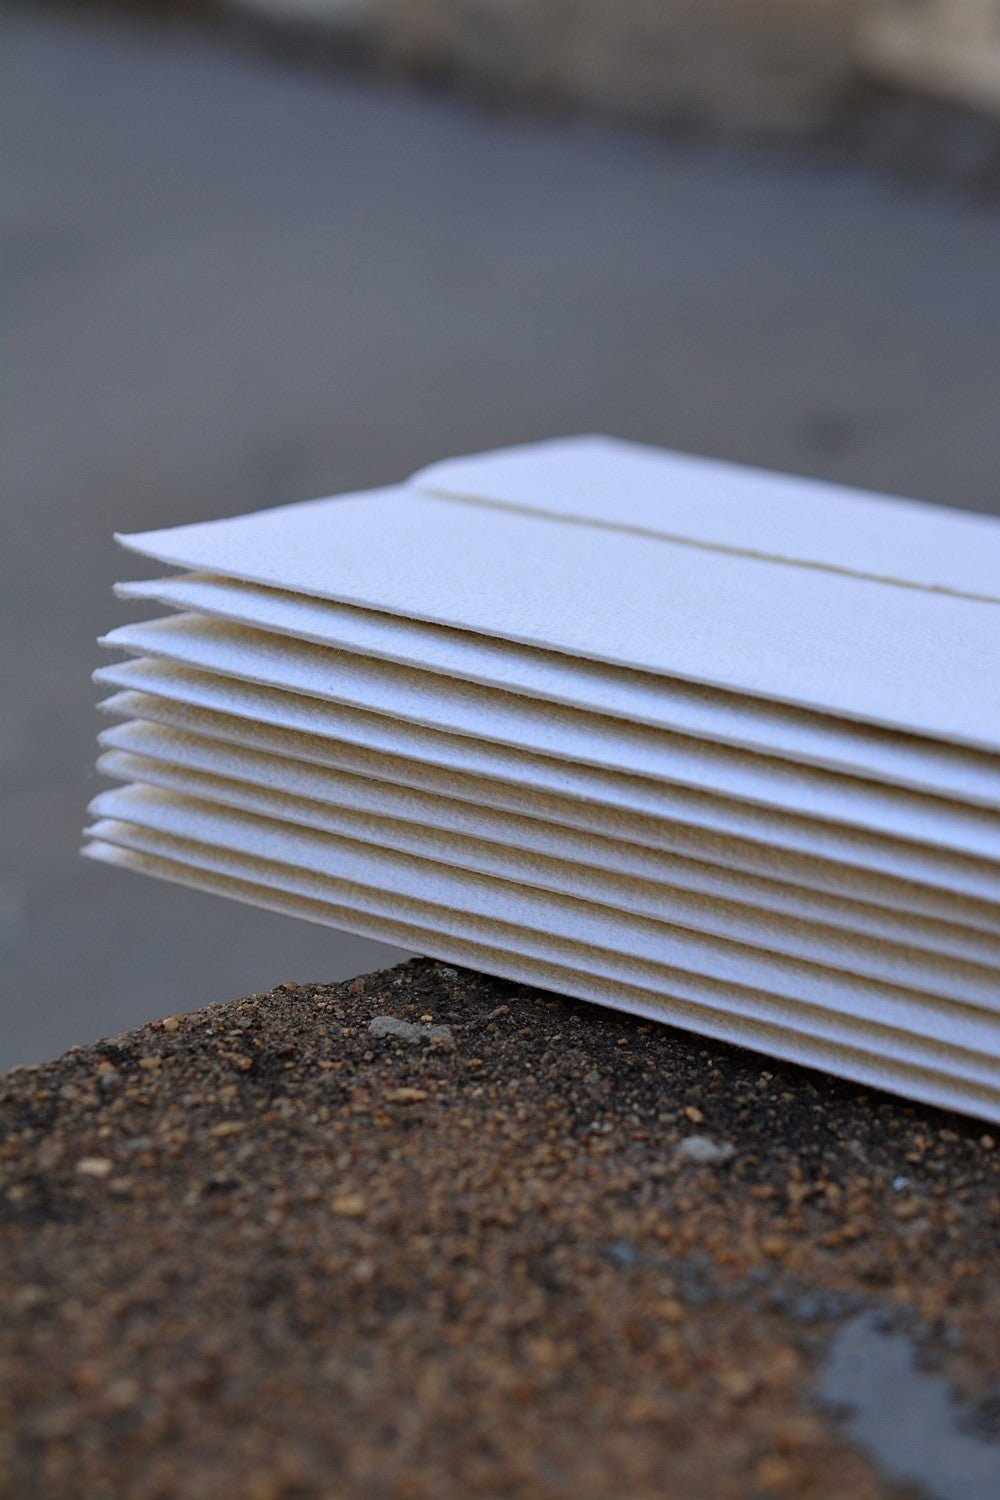 Deckle Edge Handmade Paper Envelopes - Rectangle. - metaphorracha